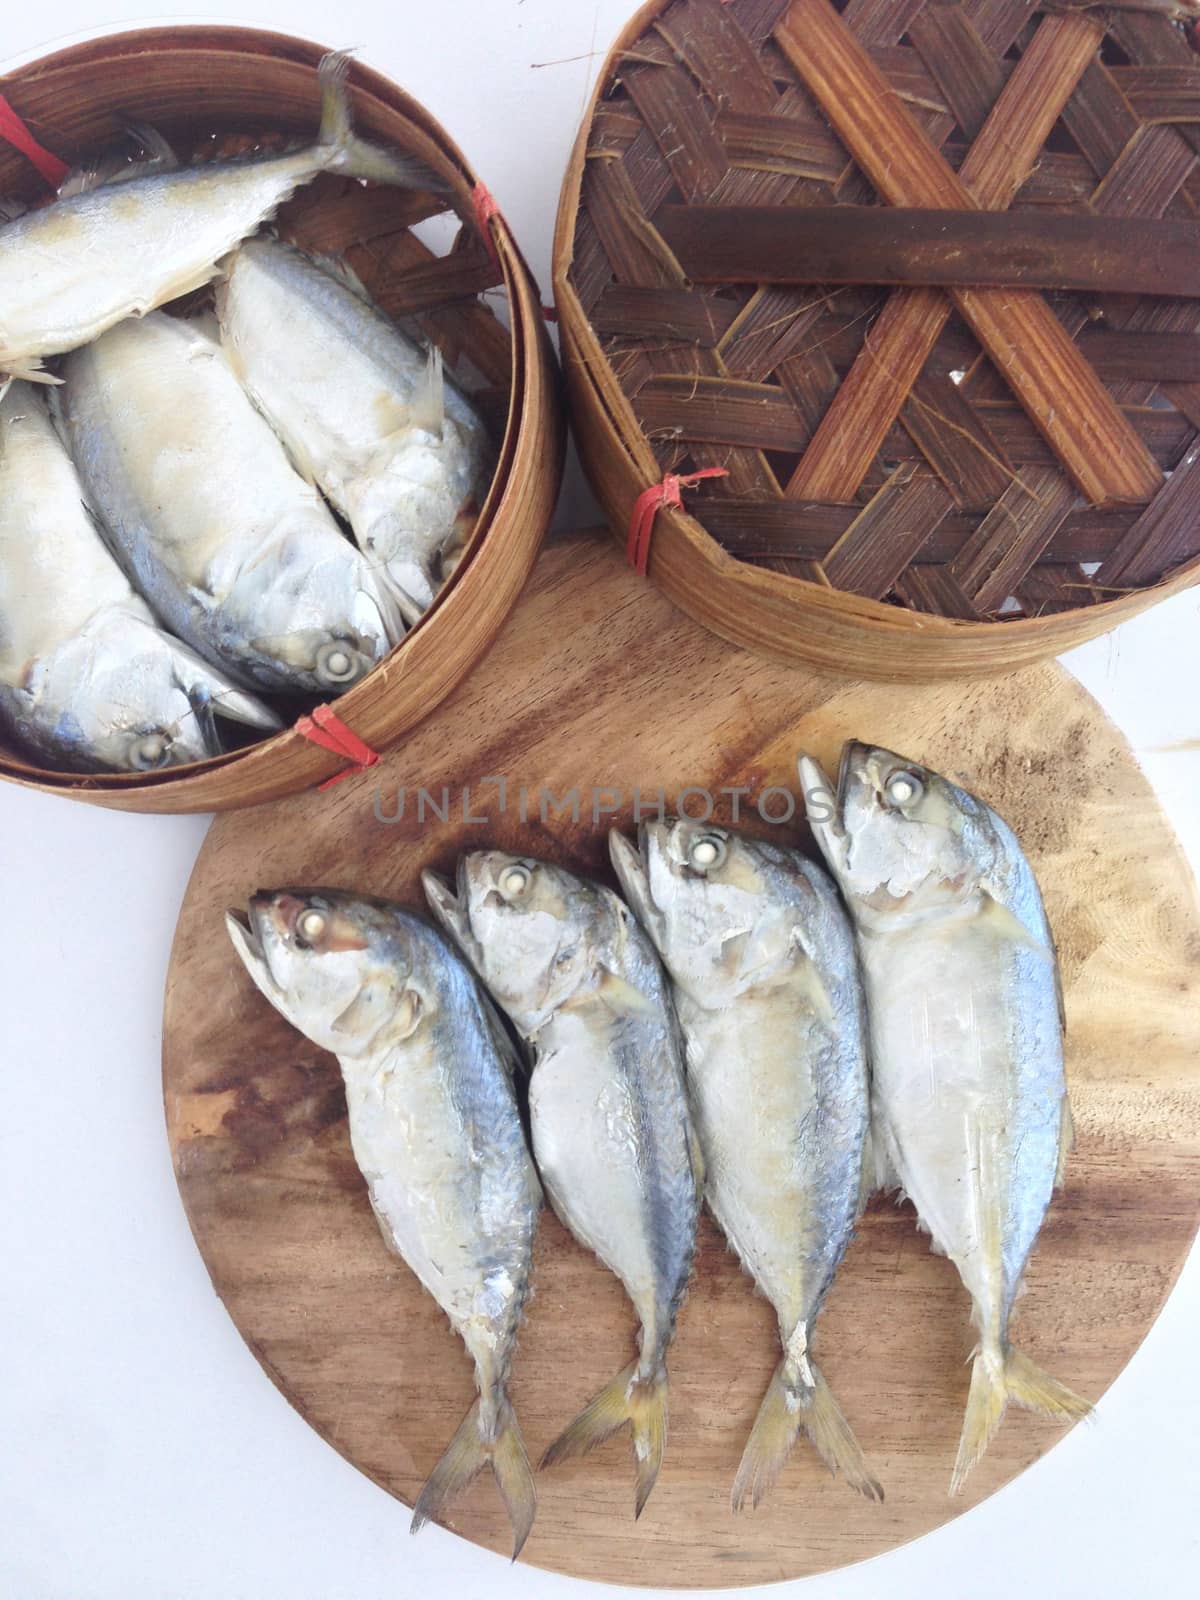 short mackerel on cutting board with fish basket by Bowonpat